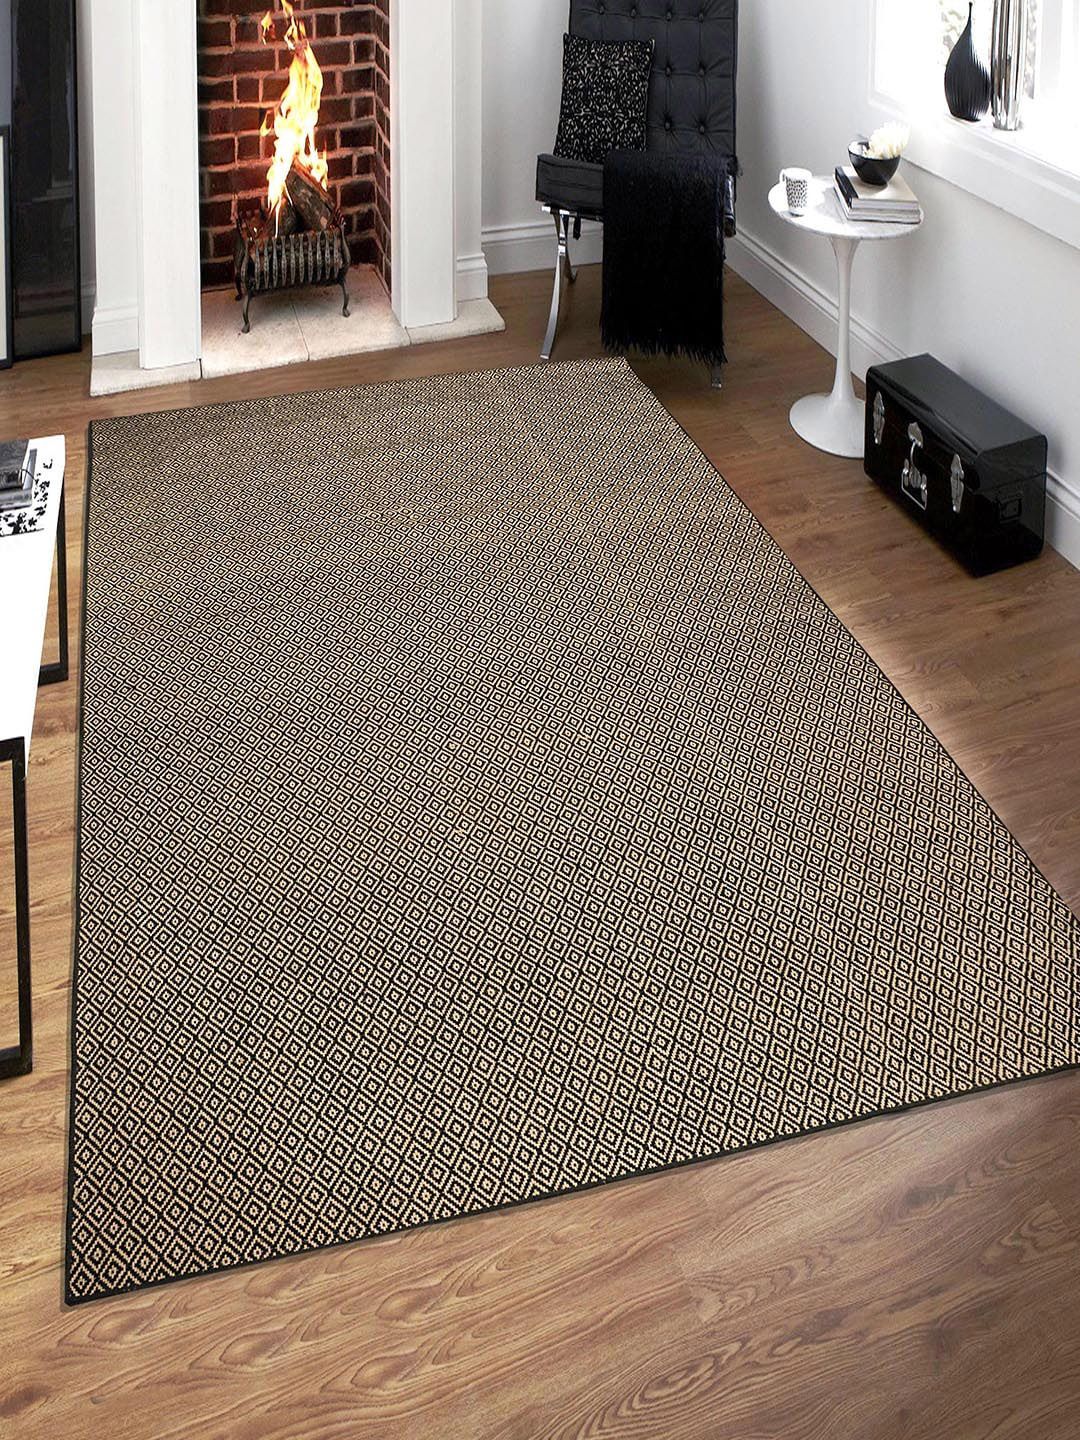 Saral Home Brown & Black Woven-Design Anti-Skid Carpet Price in India